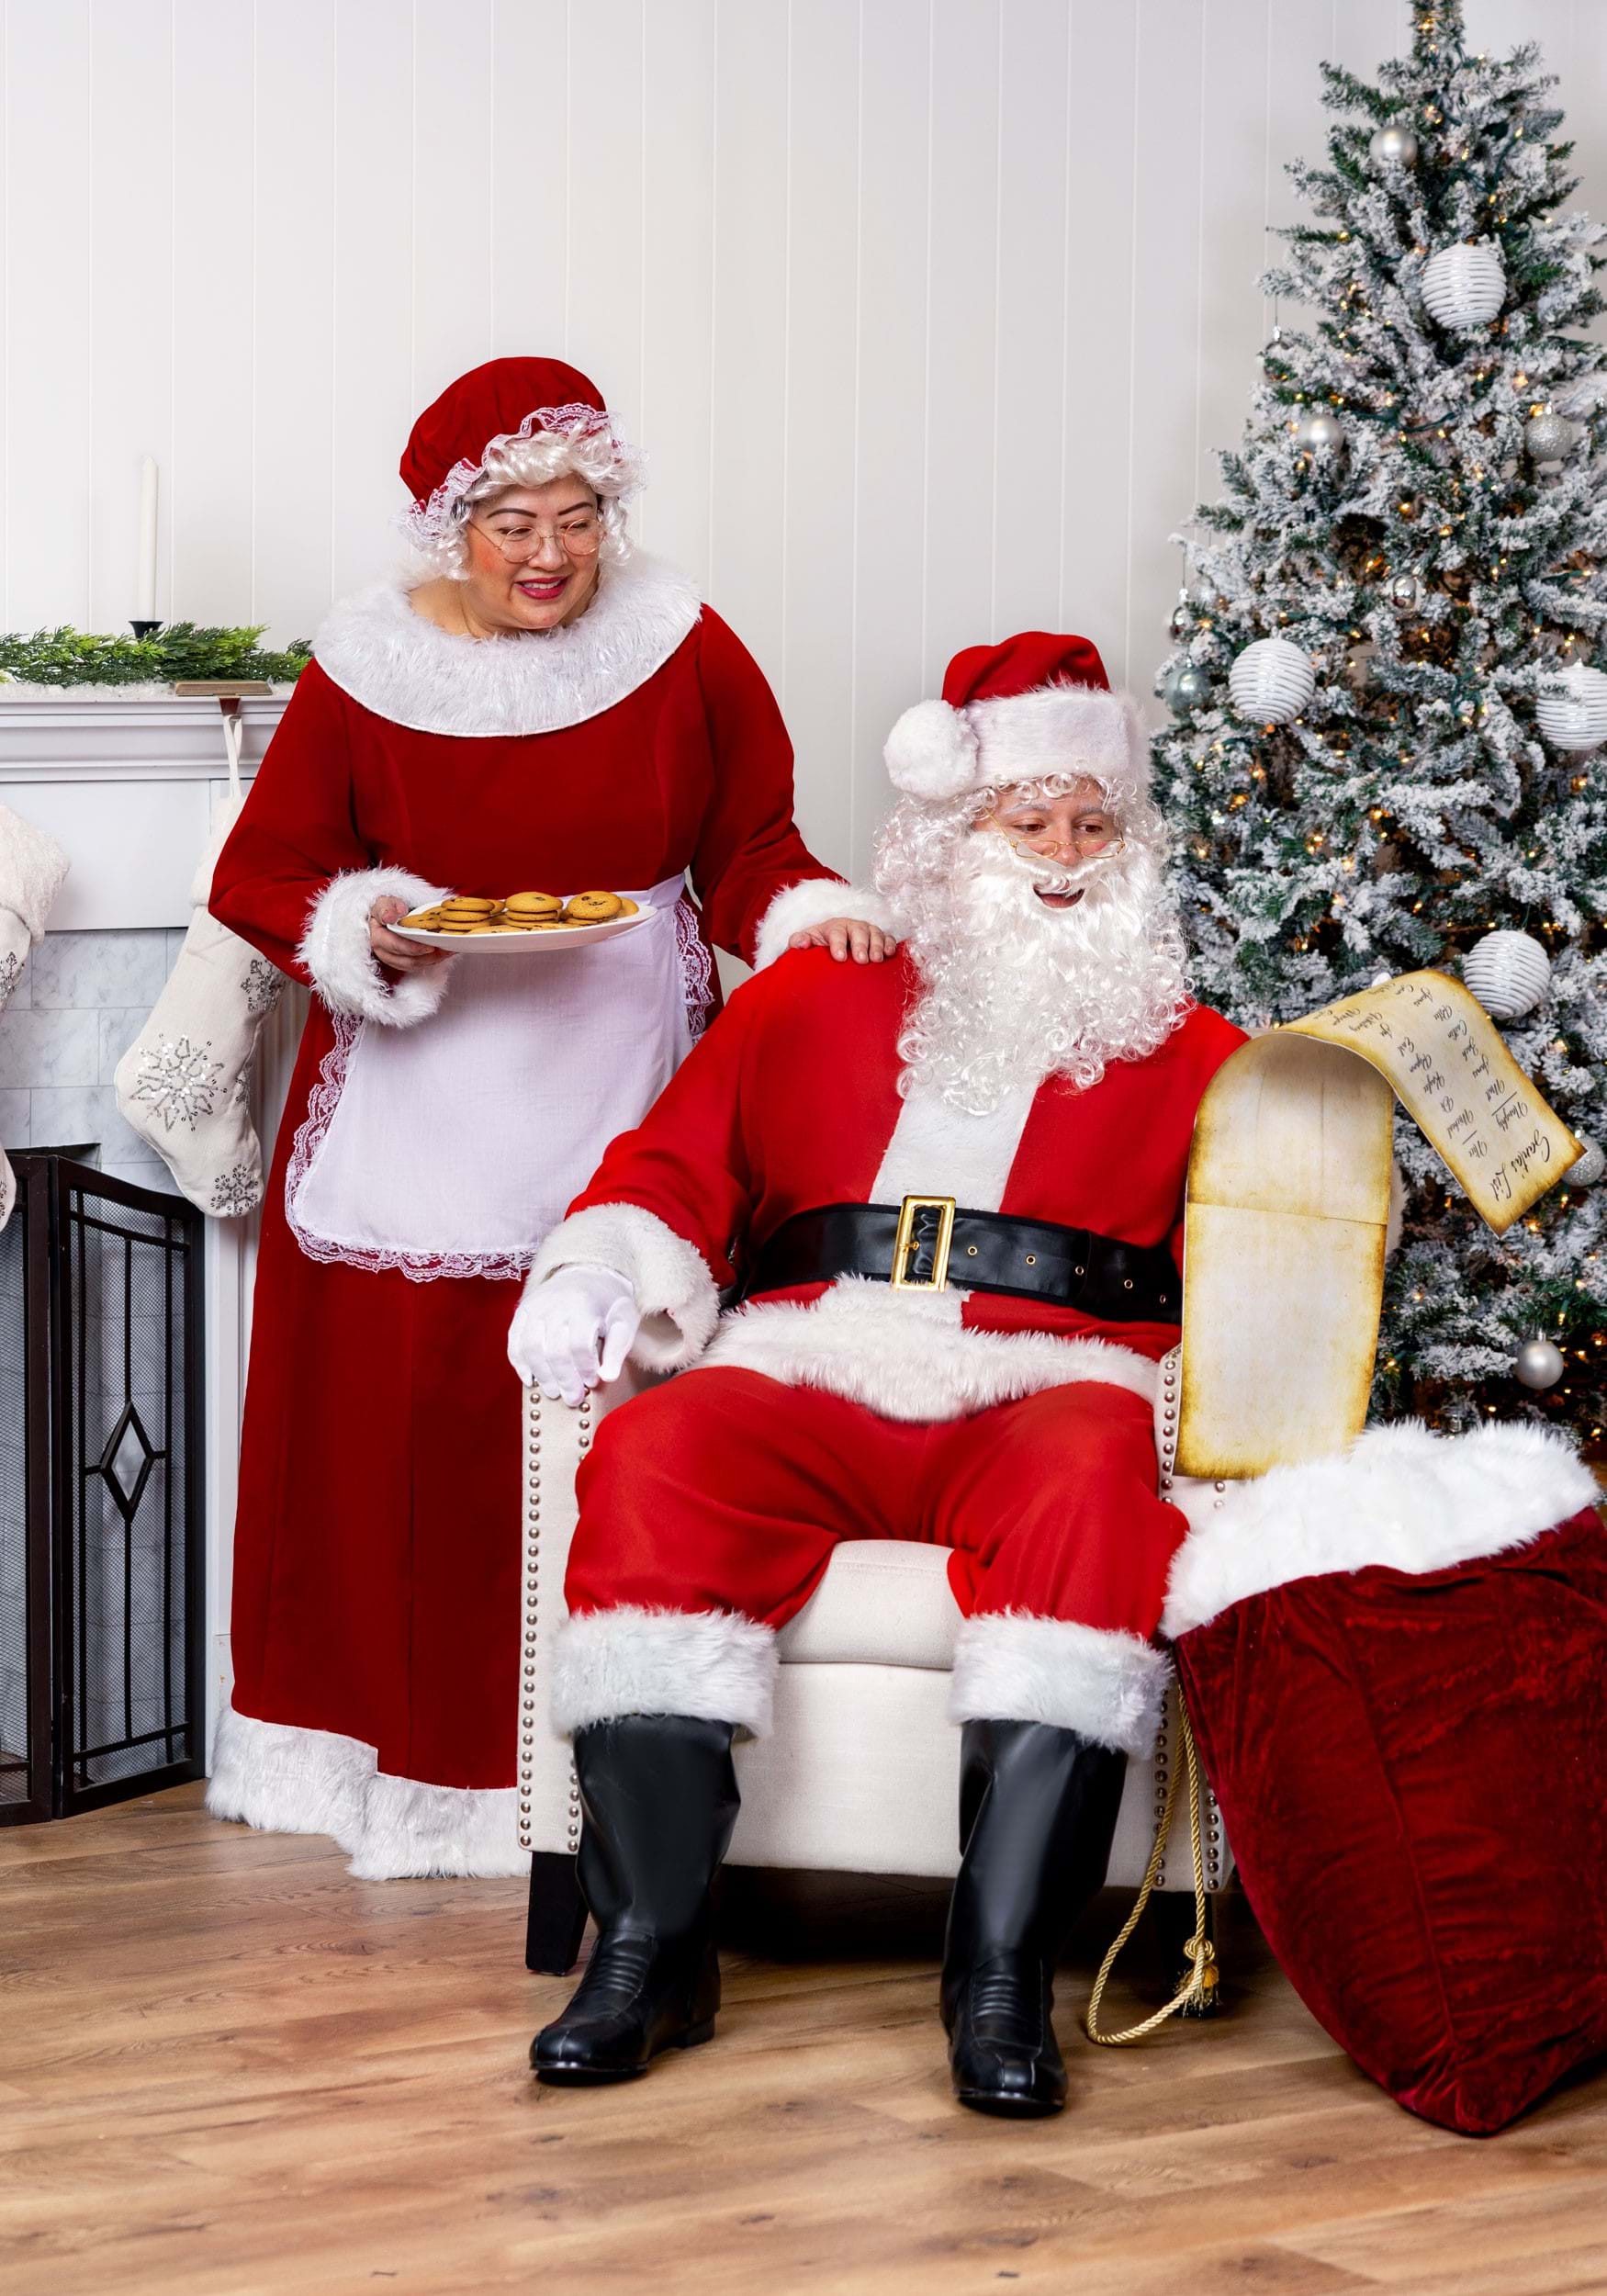 Lov Baby Kids Girl Christmas Santa Claus Costume Set, Velvet Long  Sleeve Tops + Bell Bottom + Hat Xmas Cosplay Outfits Set Red 1-2 Years